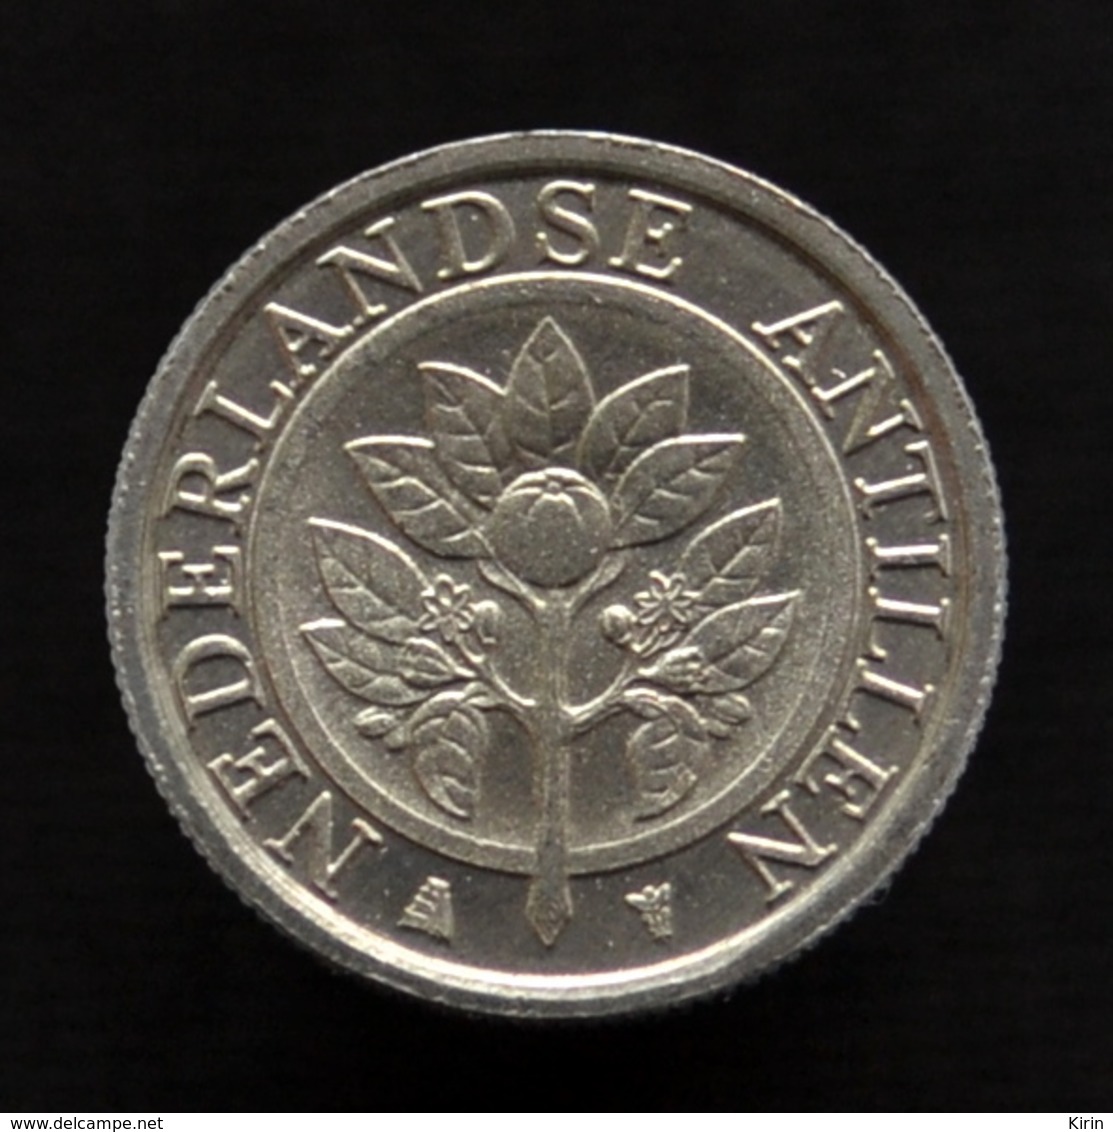 Netherlands Antilles 1 Cent 2001. Km32. Uncirculated. Plants Coin. - Netherlands Antilles